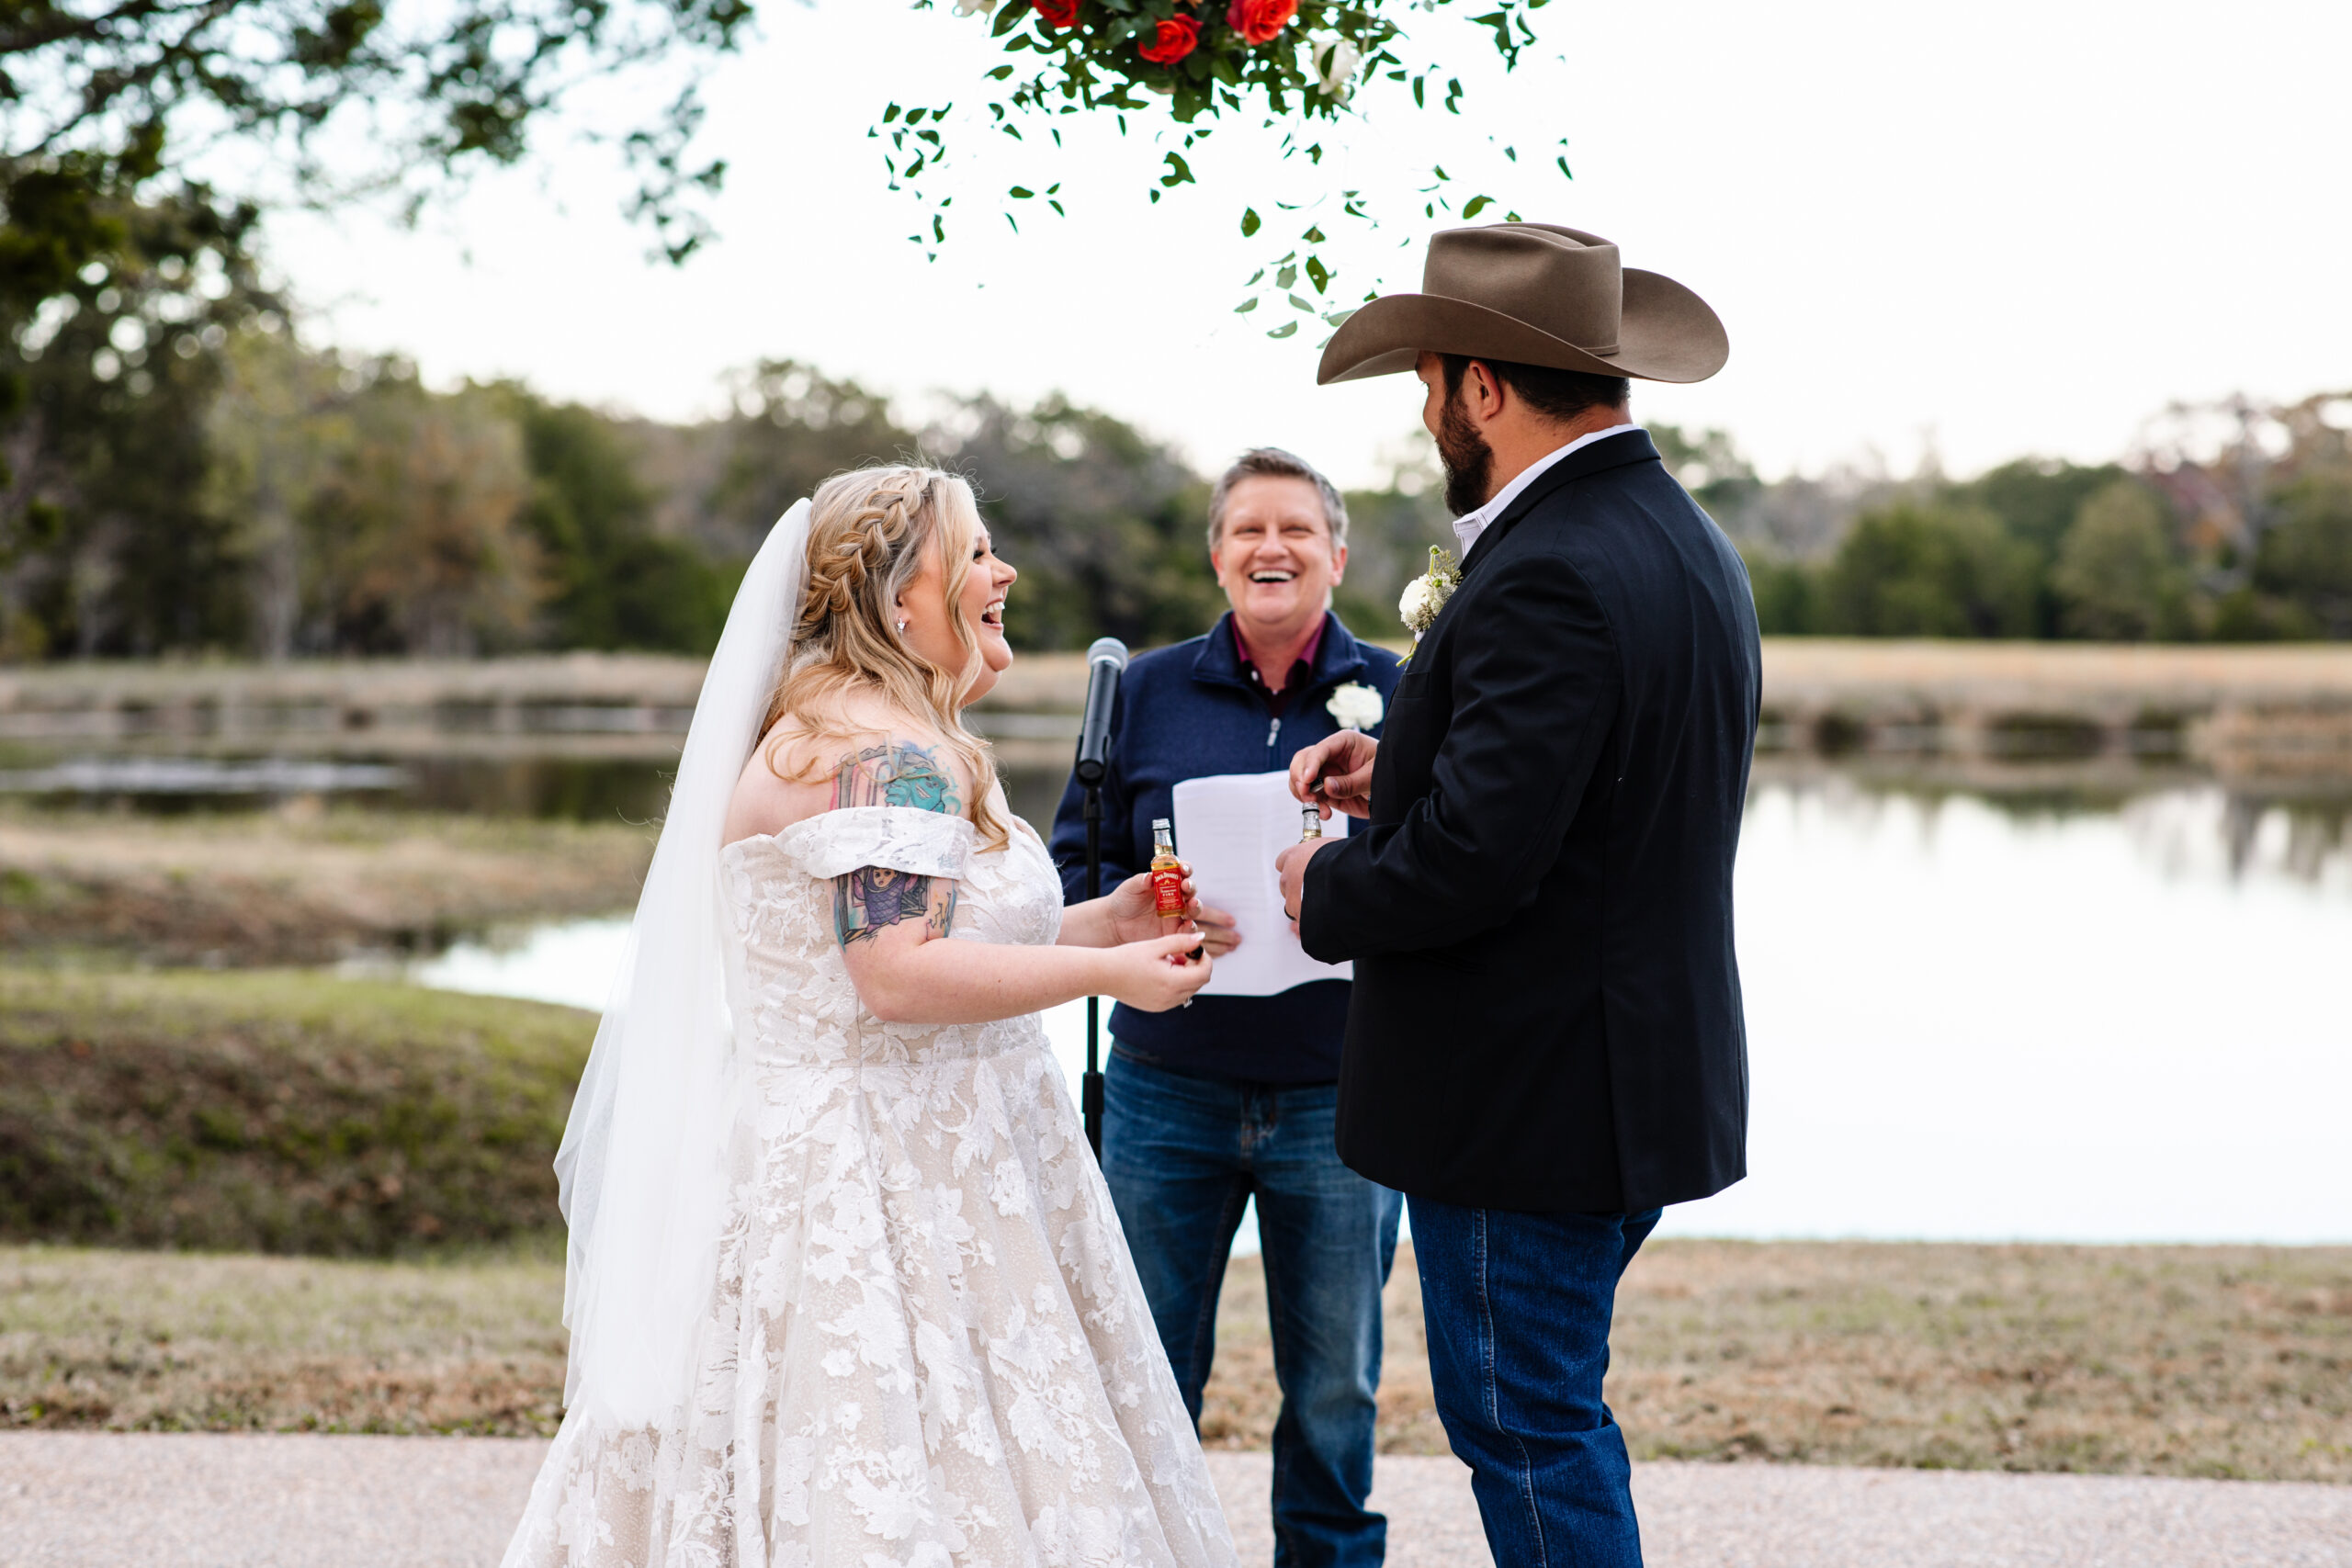 DFW wedding photographer, East Texas wedding photographer, DFW wedding photography packages, The Wildflower Event Venue, DFW wedding venues, wedding shots